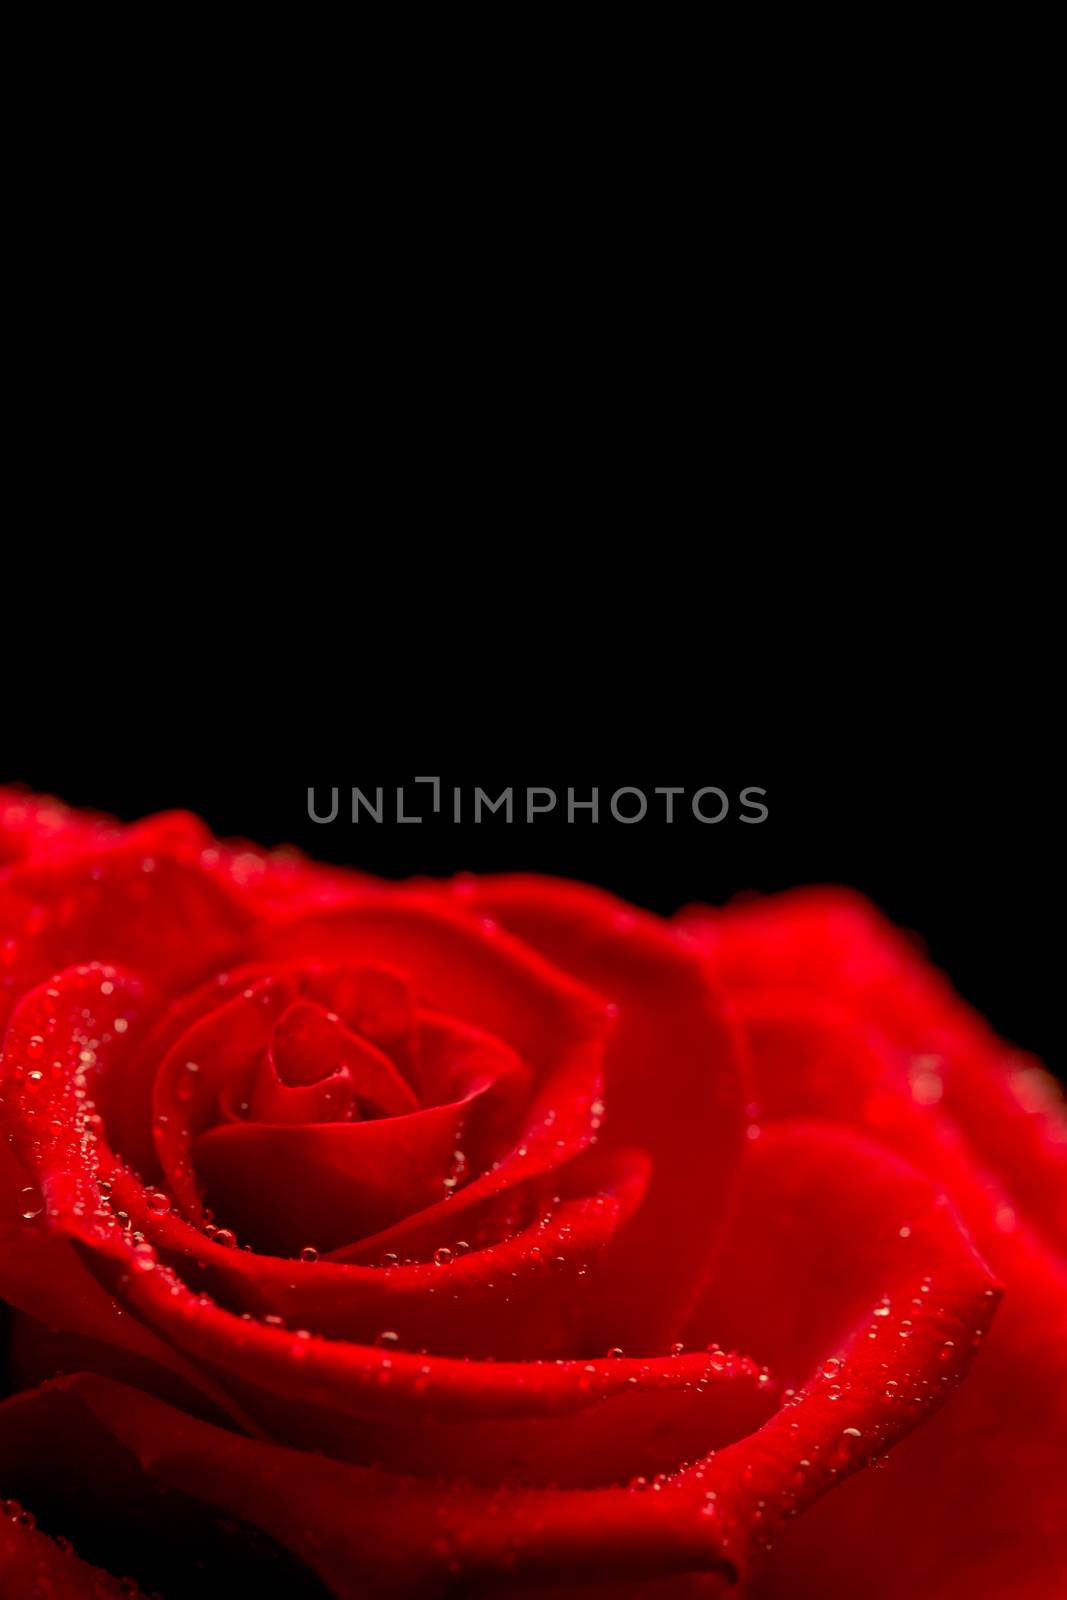 Red rose on black background by Wavebreakmedia